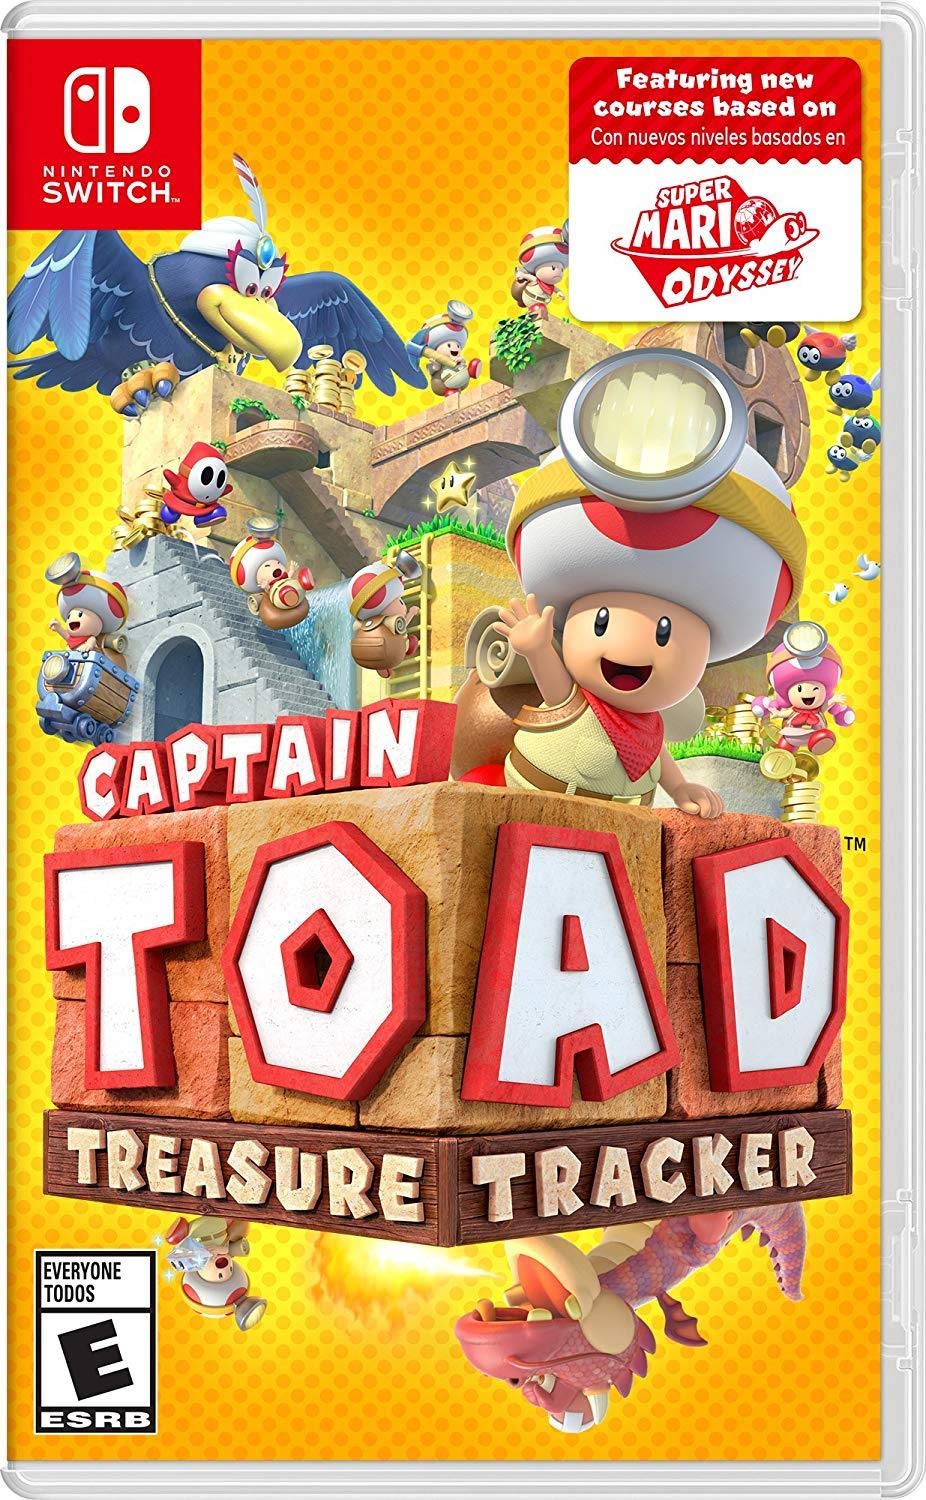 Captain Toad Treasure Tracker for Nintendo Switch artwork.